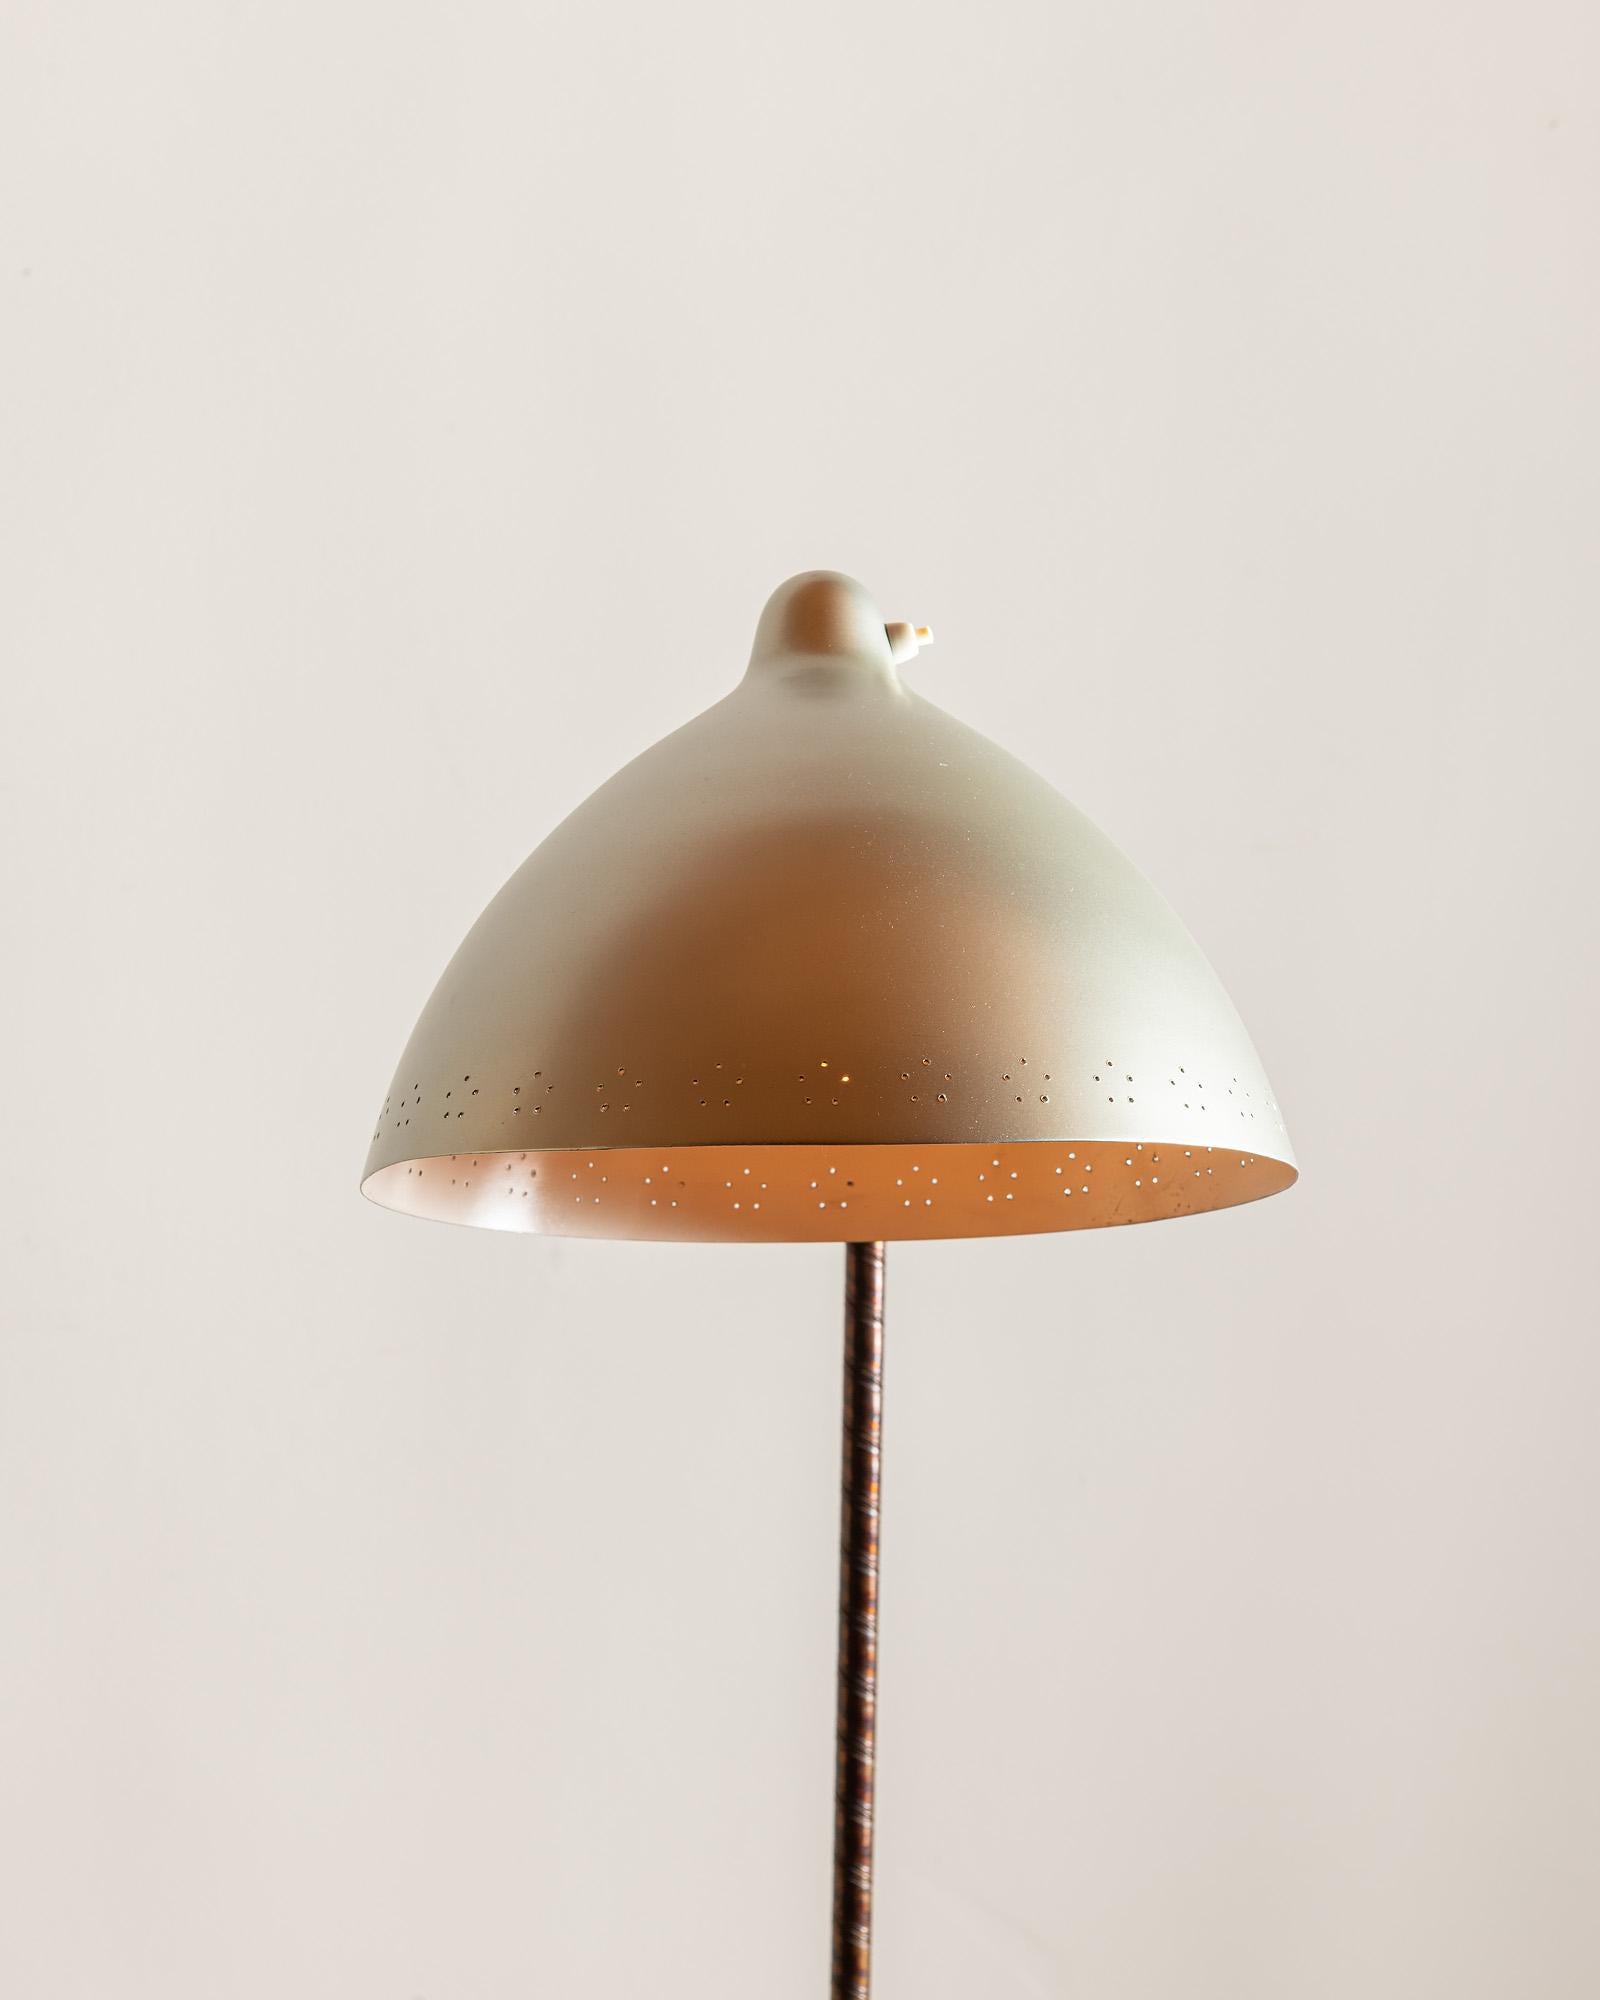 Scandinavian Modern Lisa Johansson-Pape Floor Lamp in Brass, Steel and Leather, Finland, 1950s